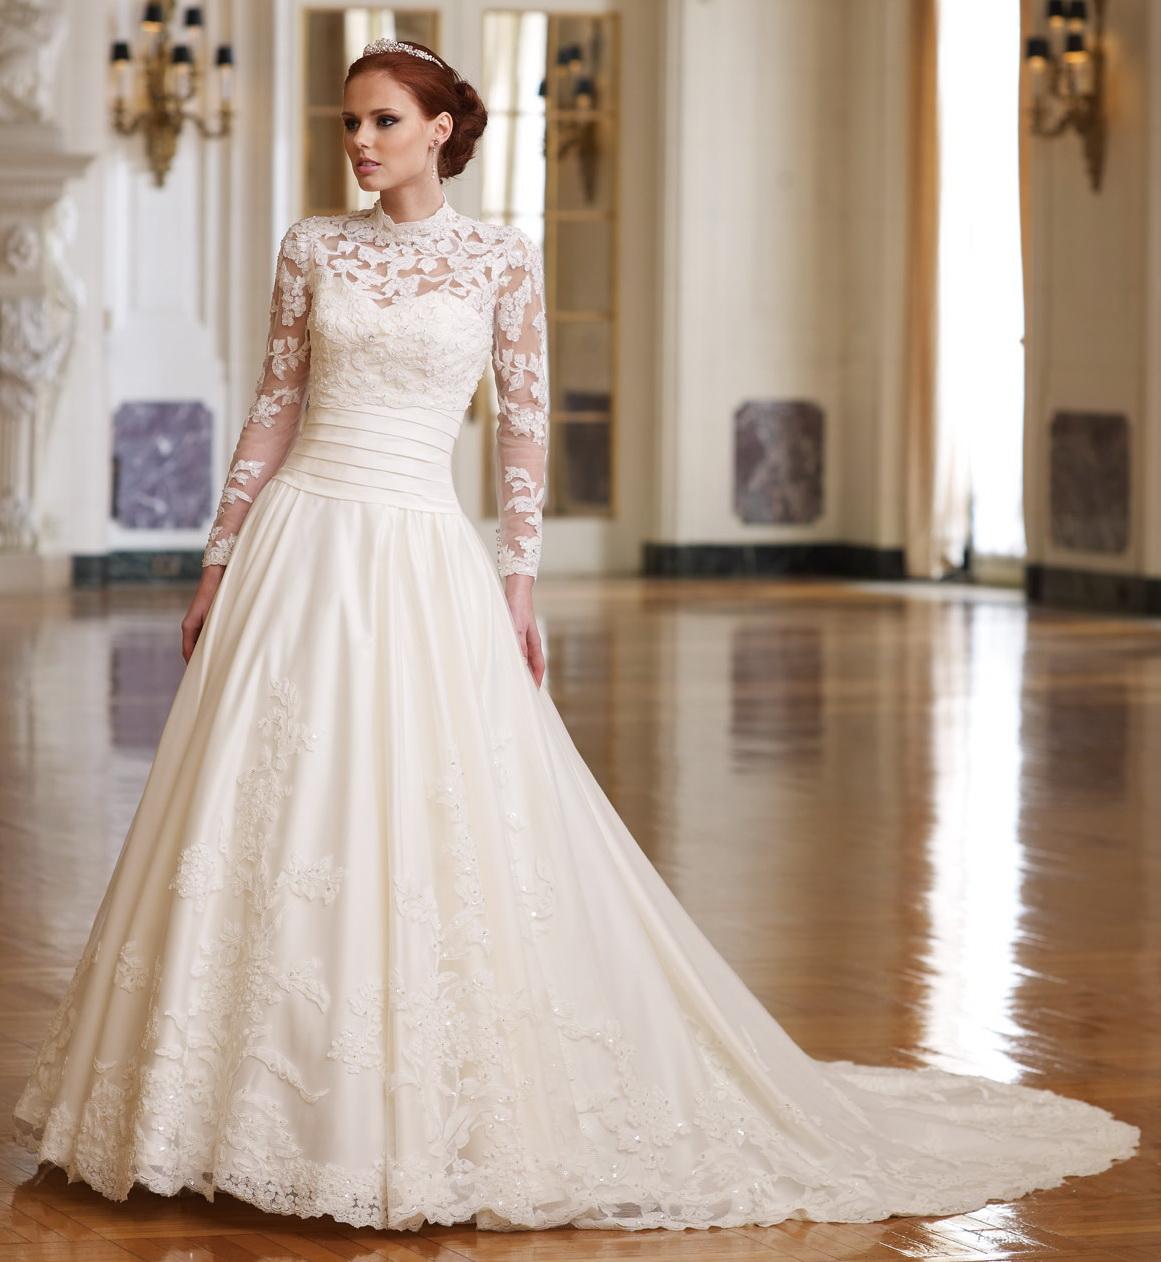 Lace Wedding Dress HD Wallpaper, Background Image